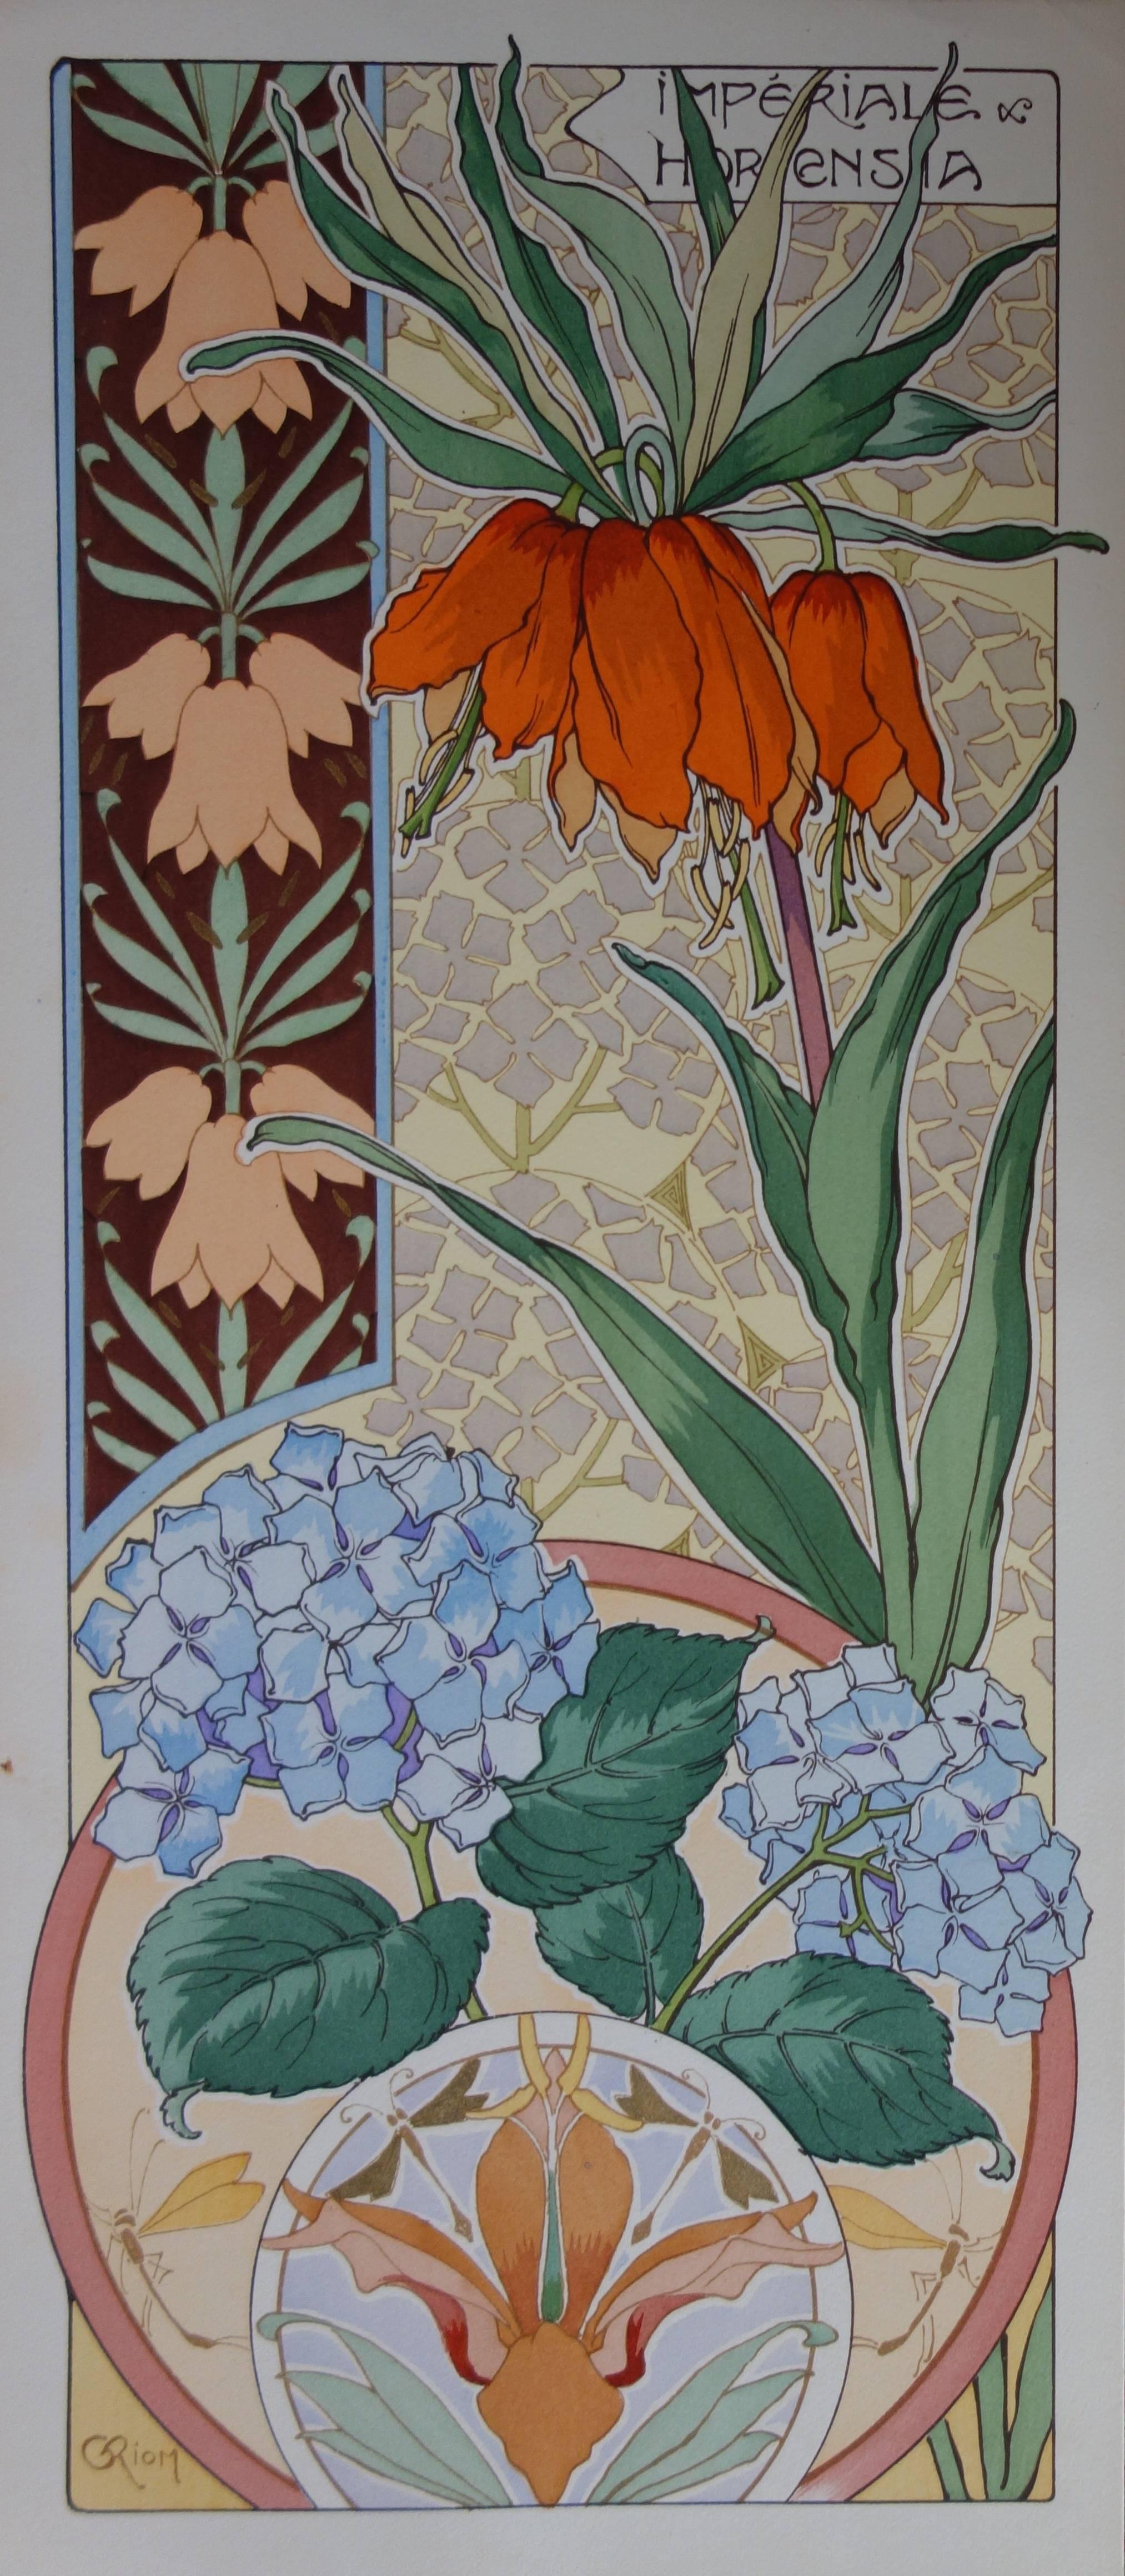 Unknown Still-Life Print - C RIOM : Imperial And Hydrangea - Original Lithograph - Art Nouveau 1890s